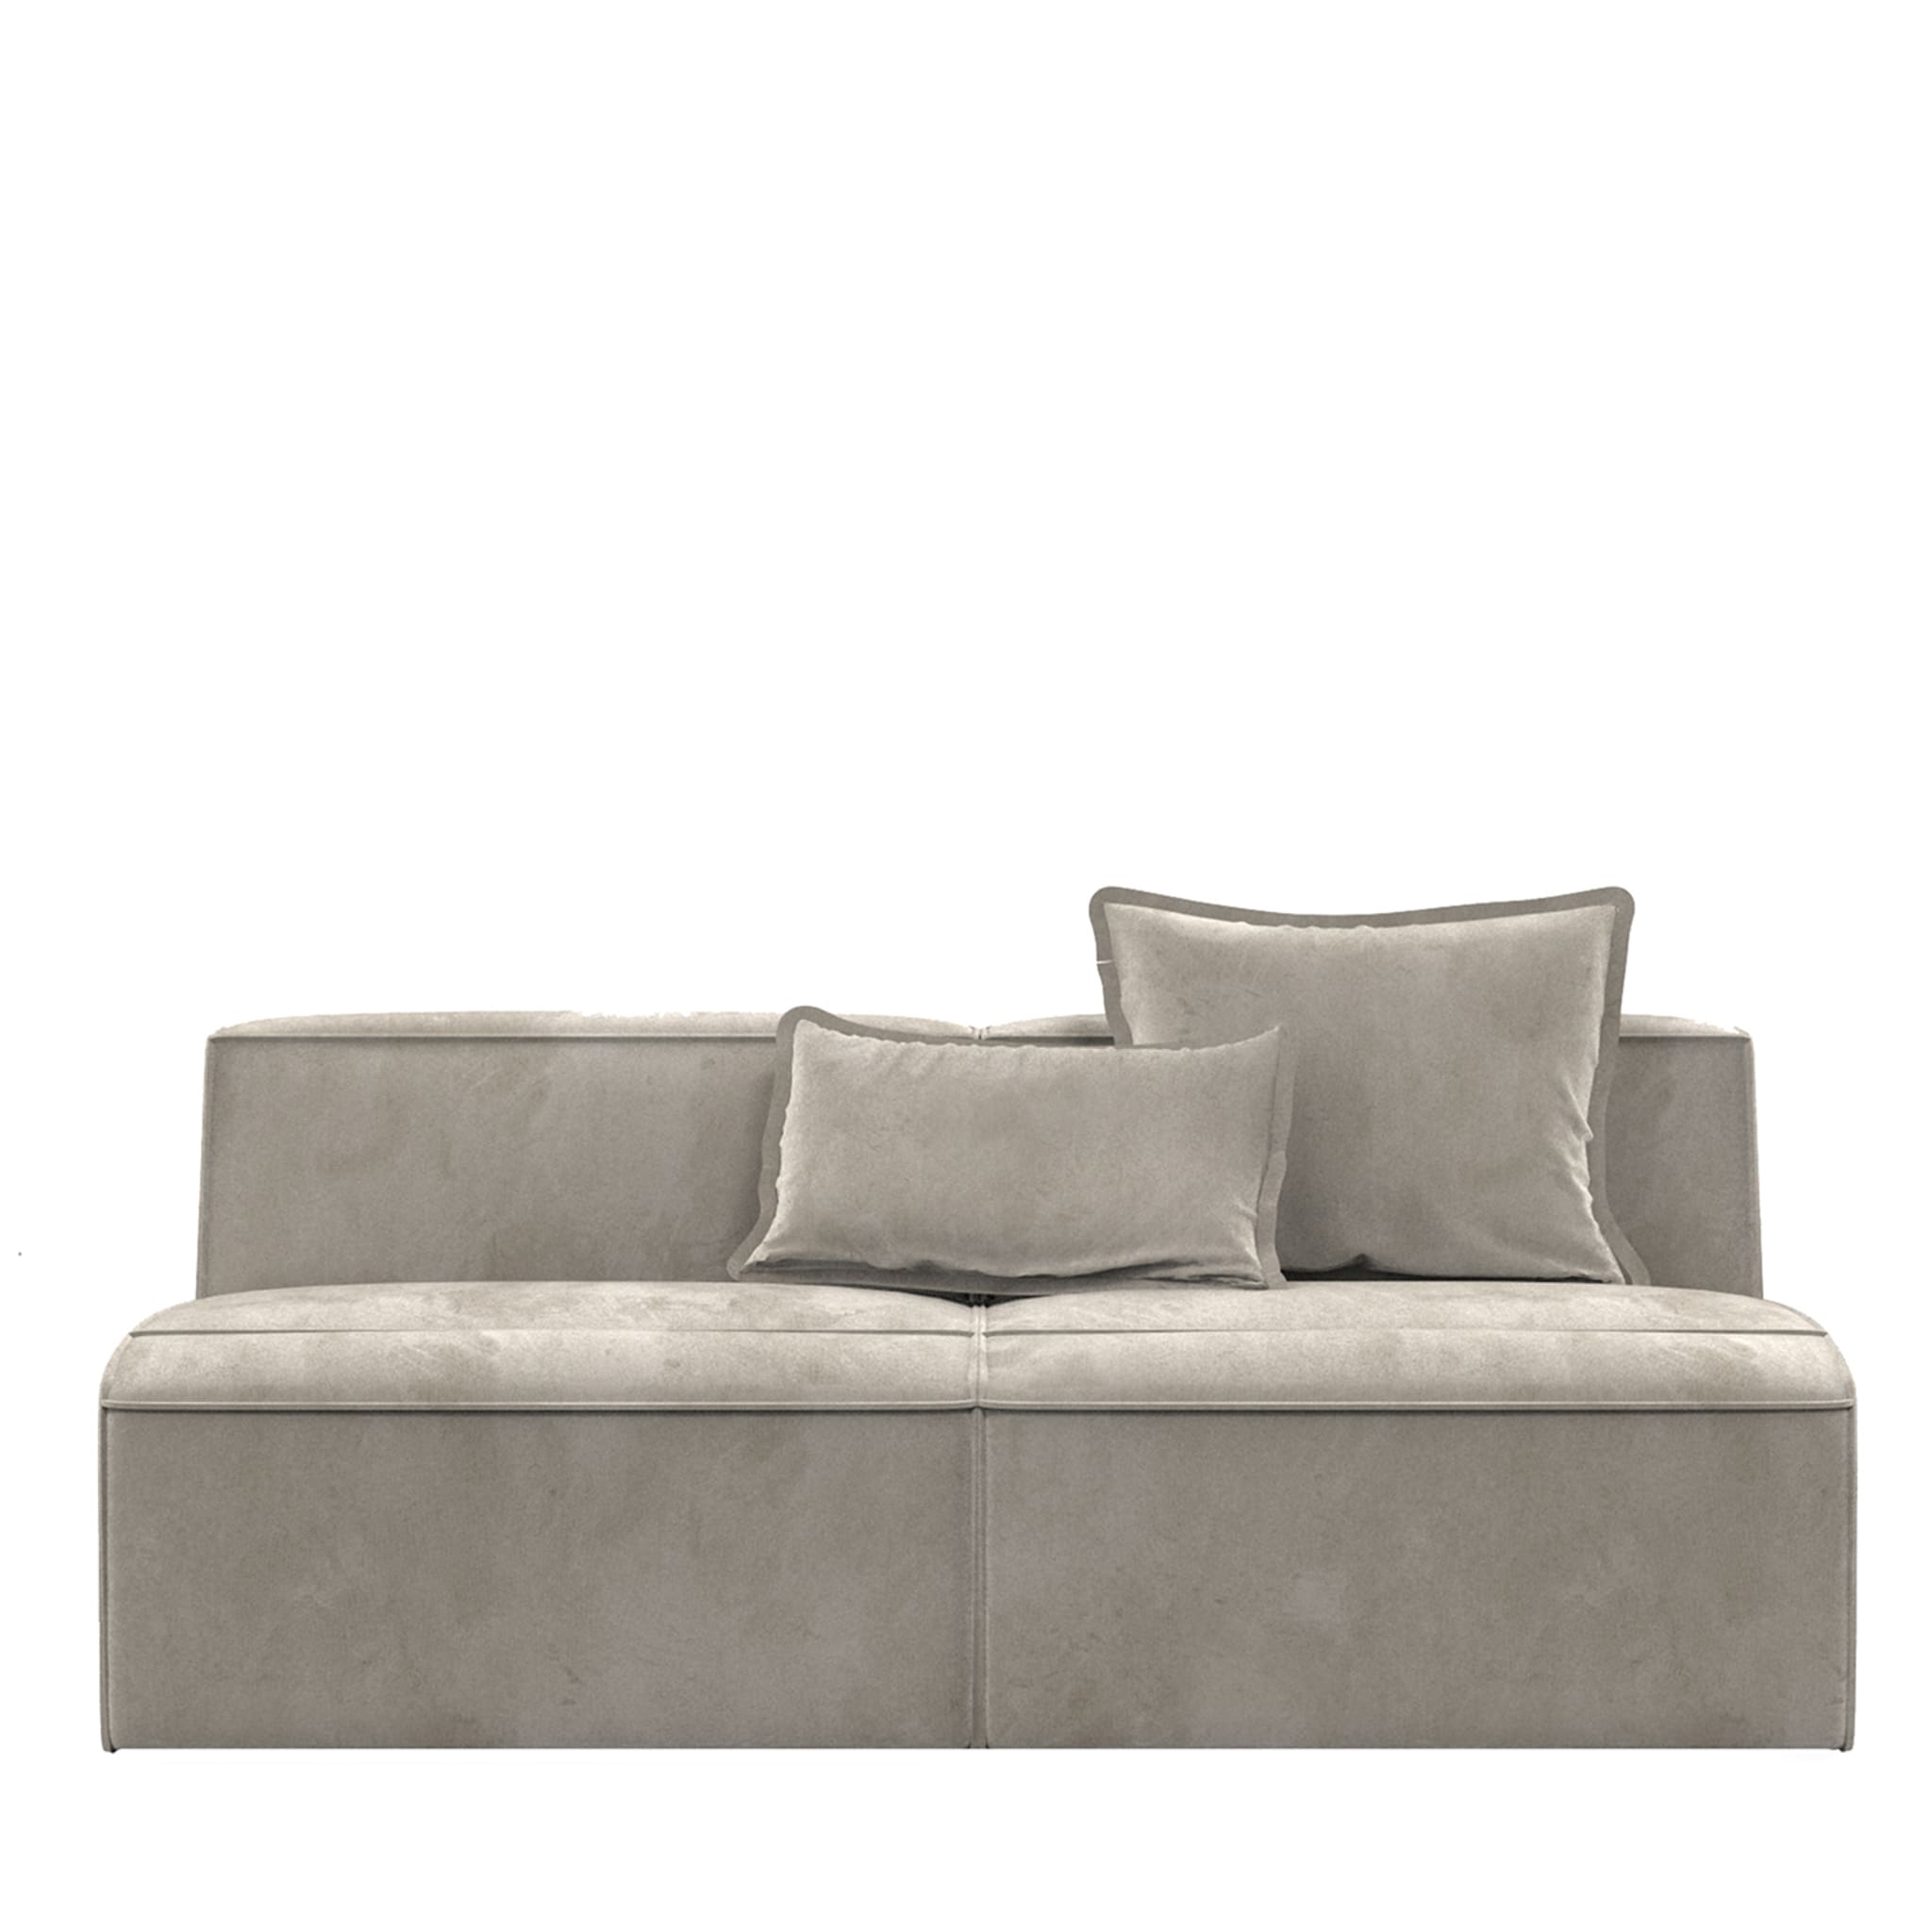 Infinito Small Gray Sofa by Lorenza Bozzoli - Main view